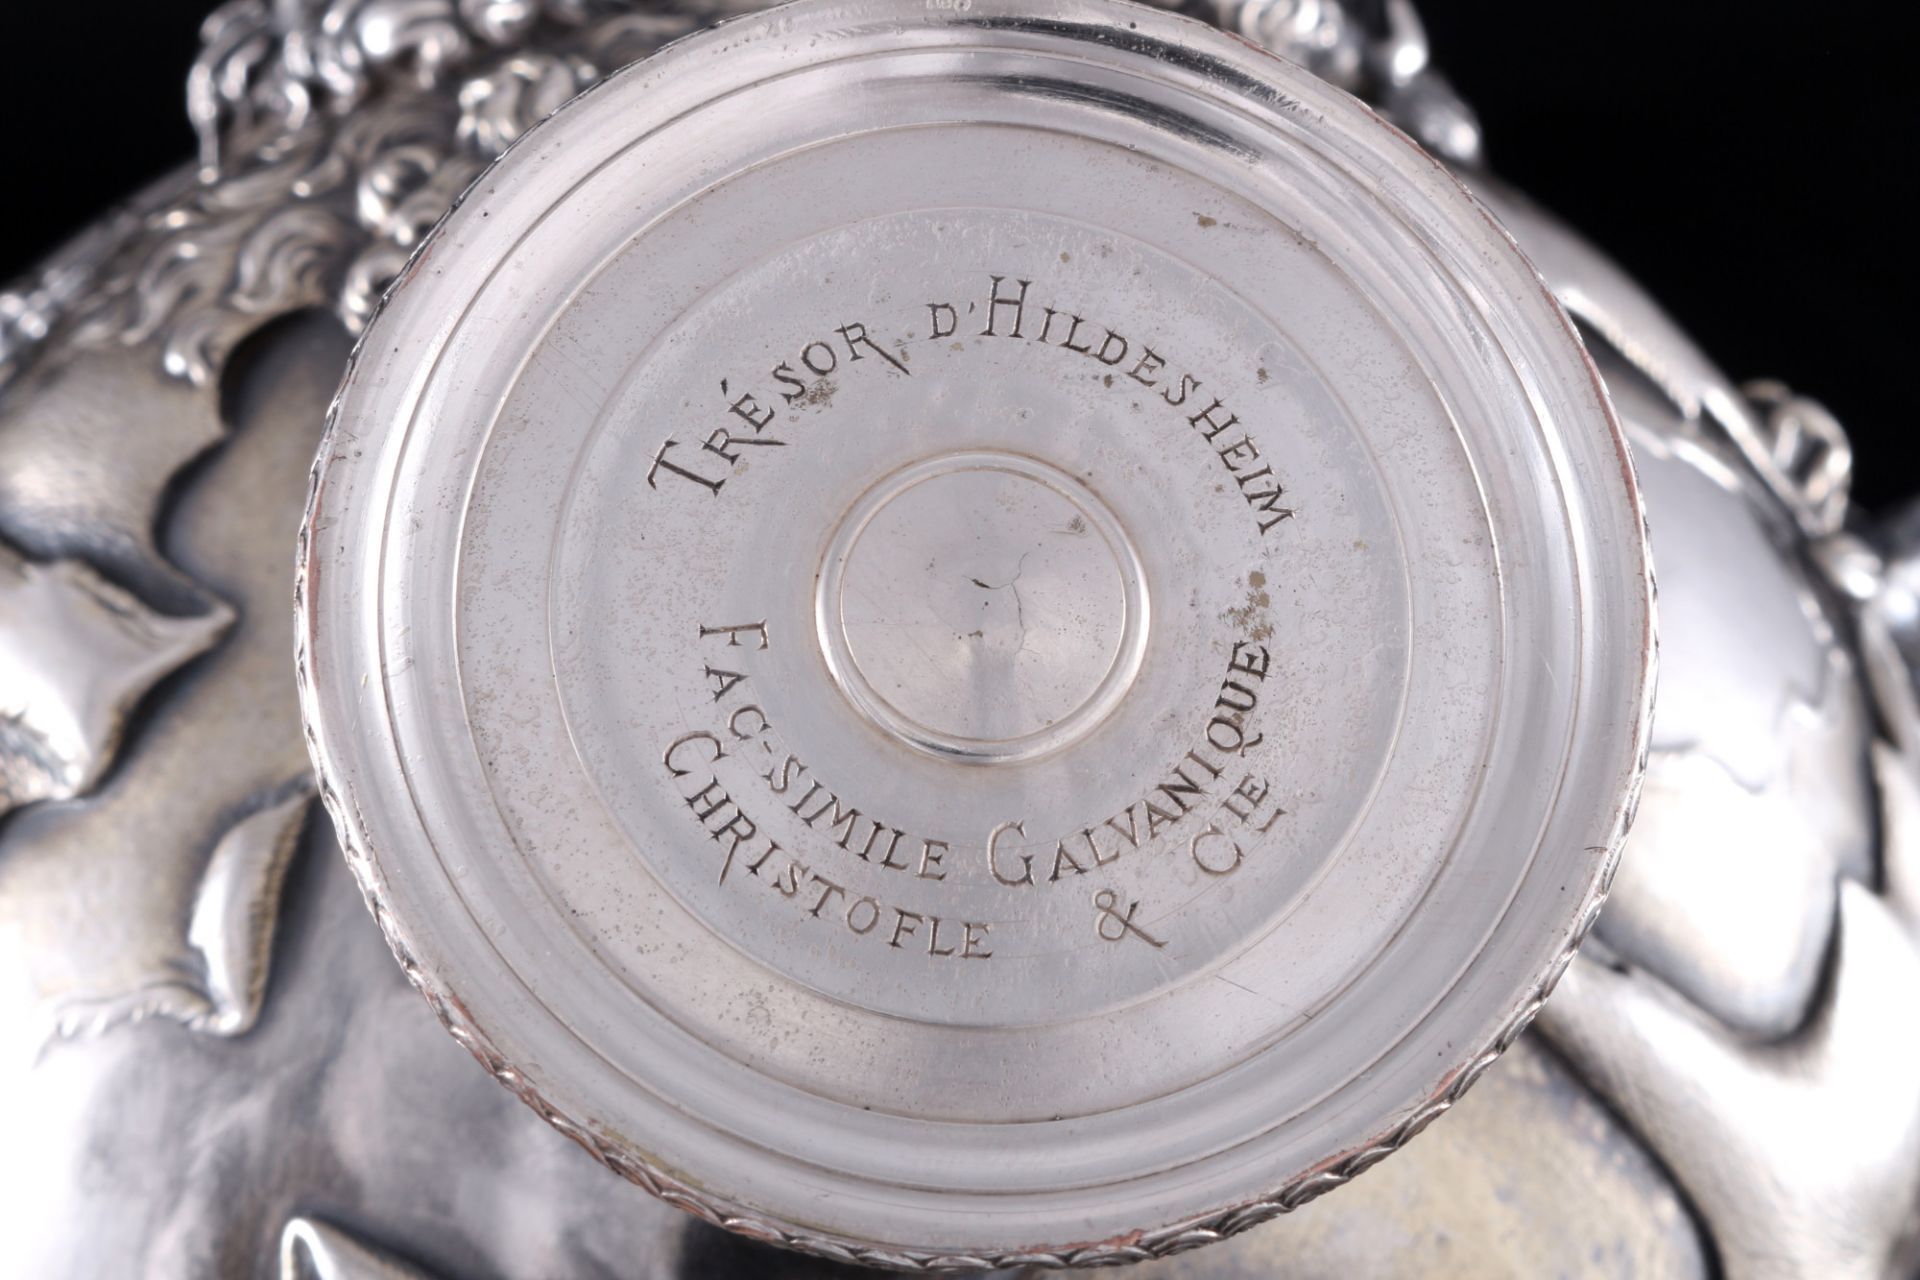 Christofle Hildesheim Treasure facsimile goblet around 1870, Hildesheimer Silberfund Faksimile Kelch - Image 5 of 5